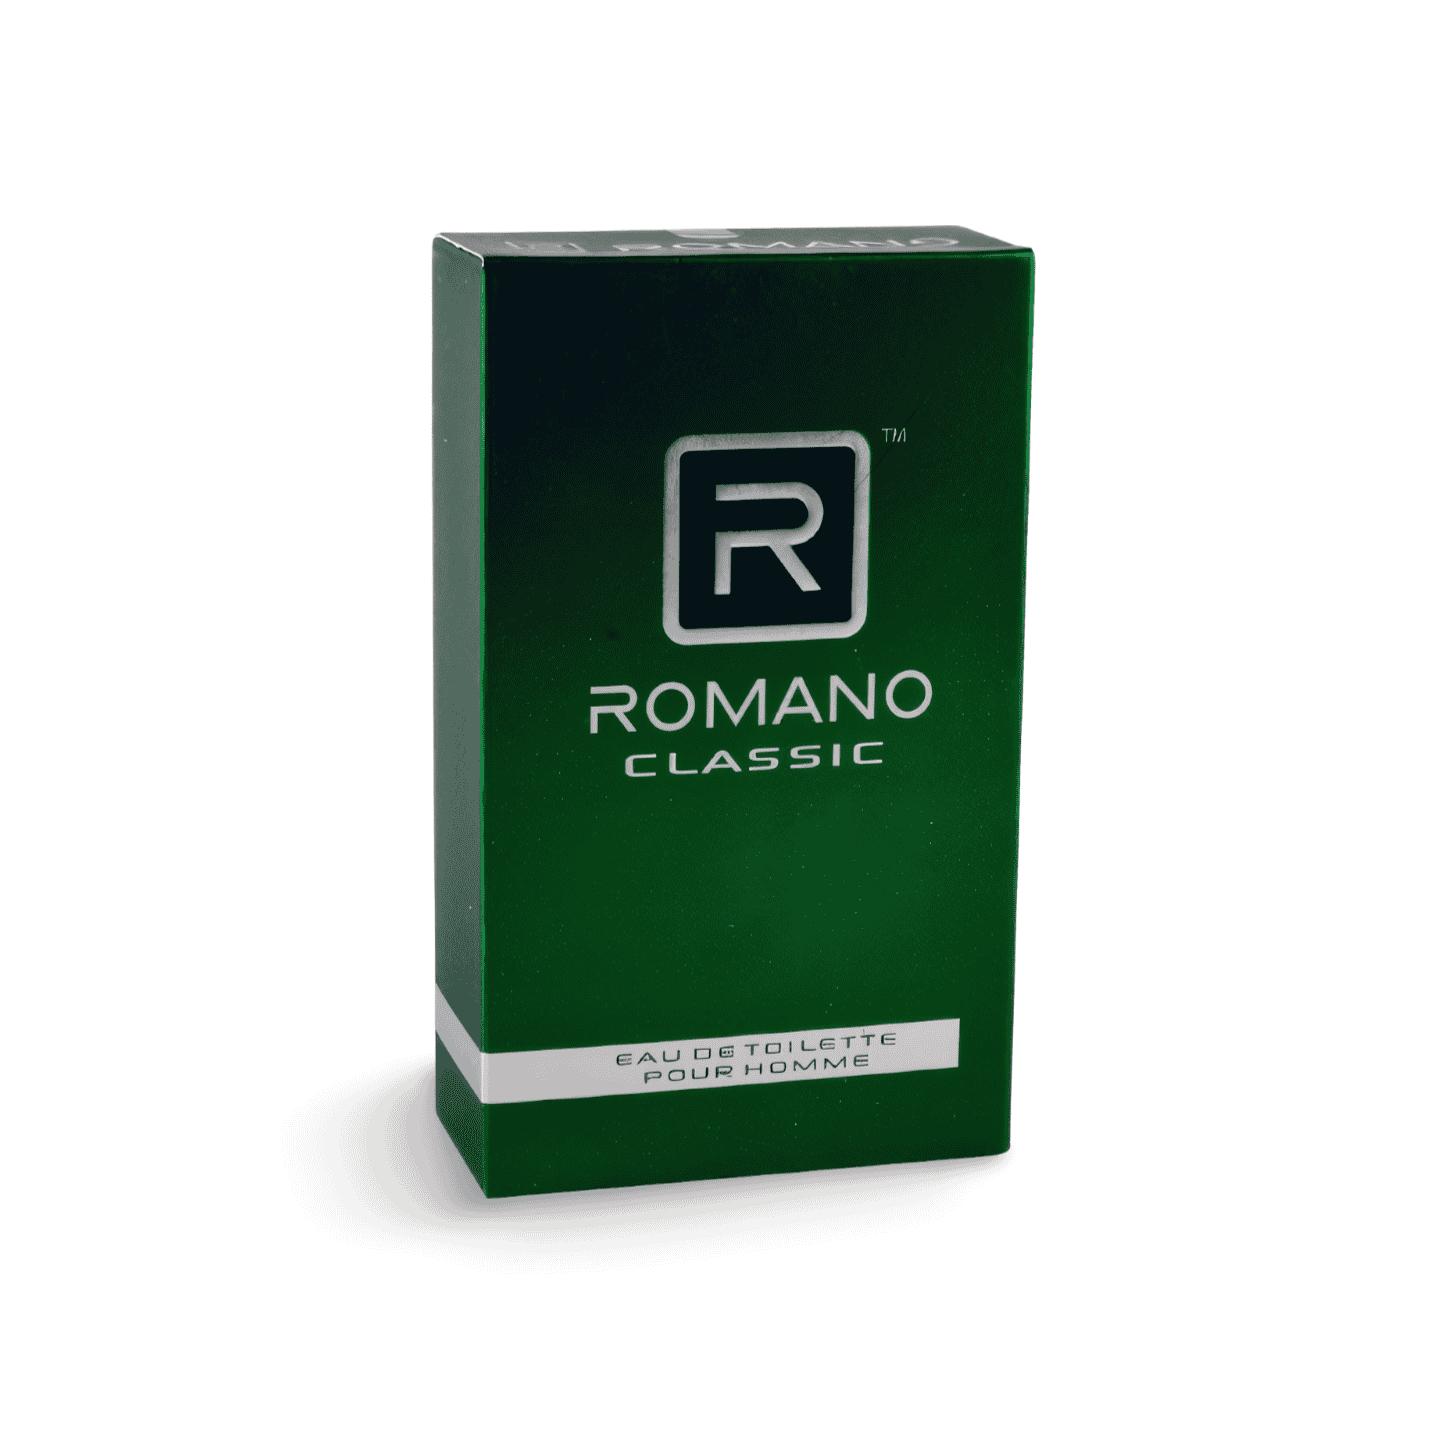 Romano Classic Perfume